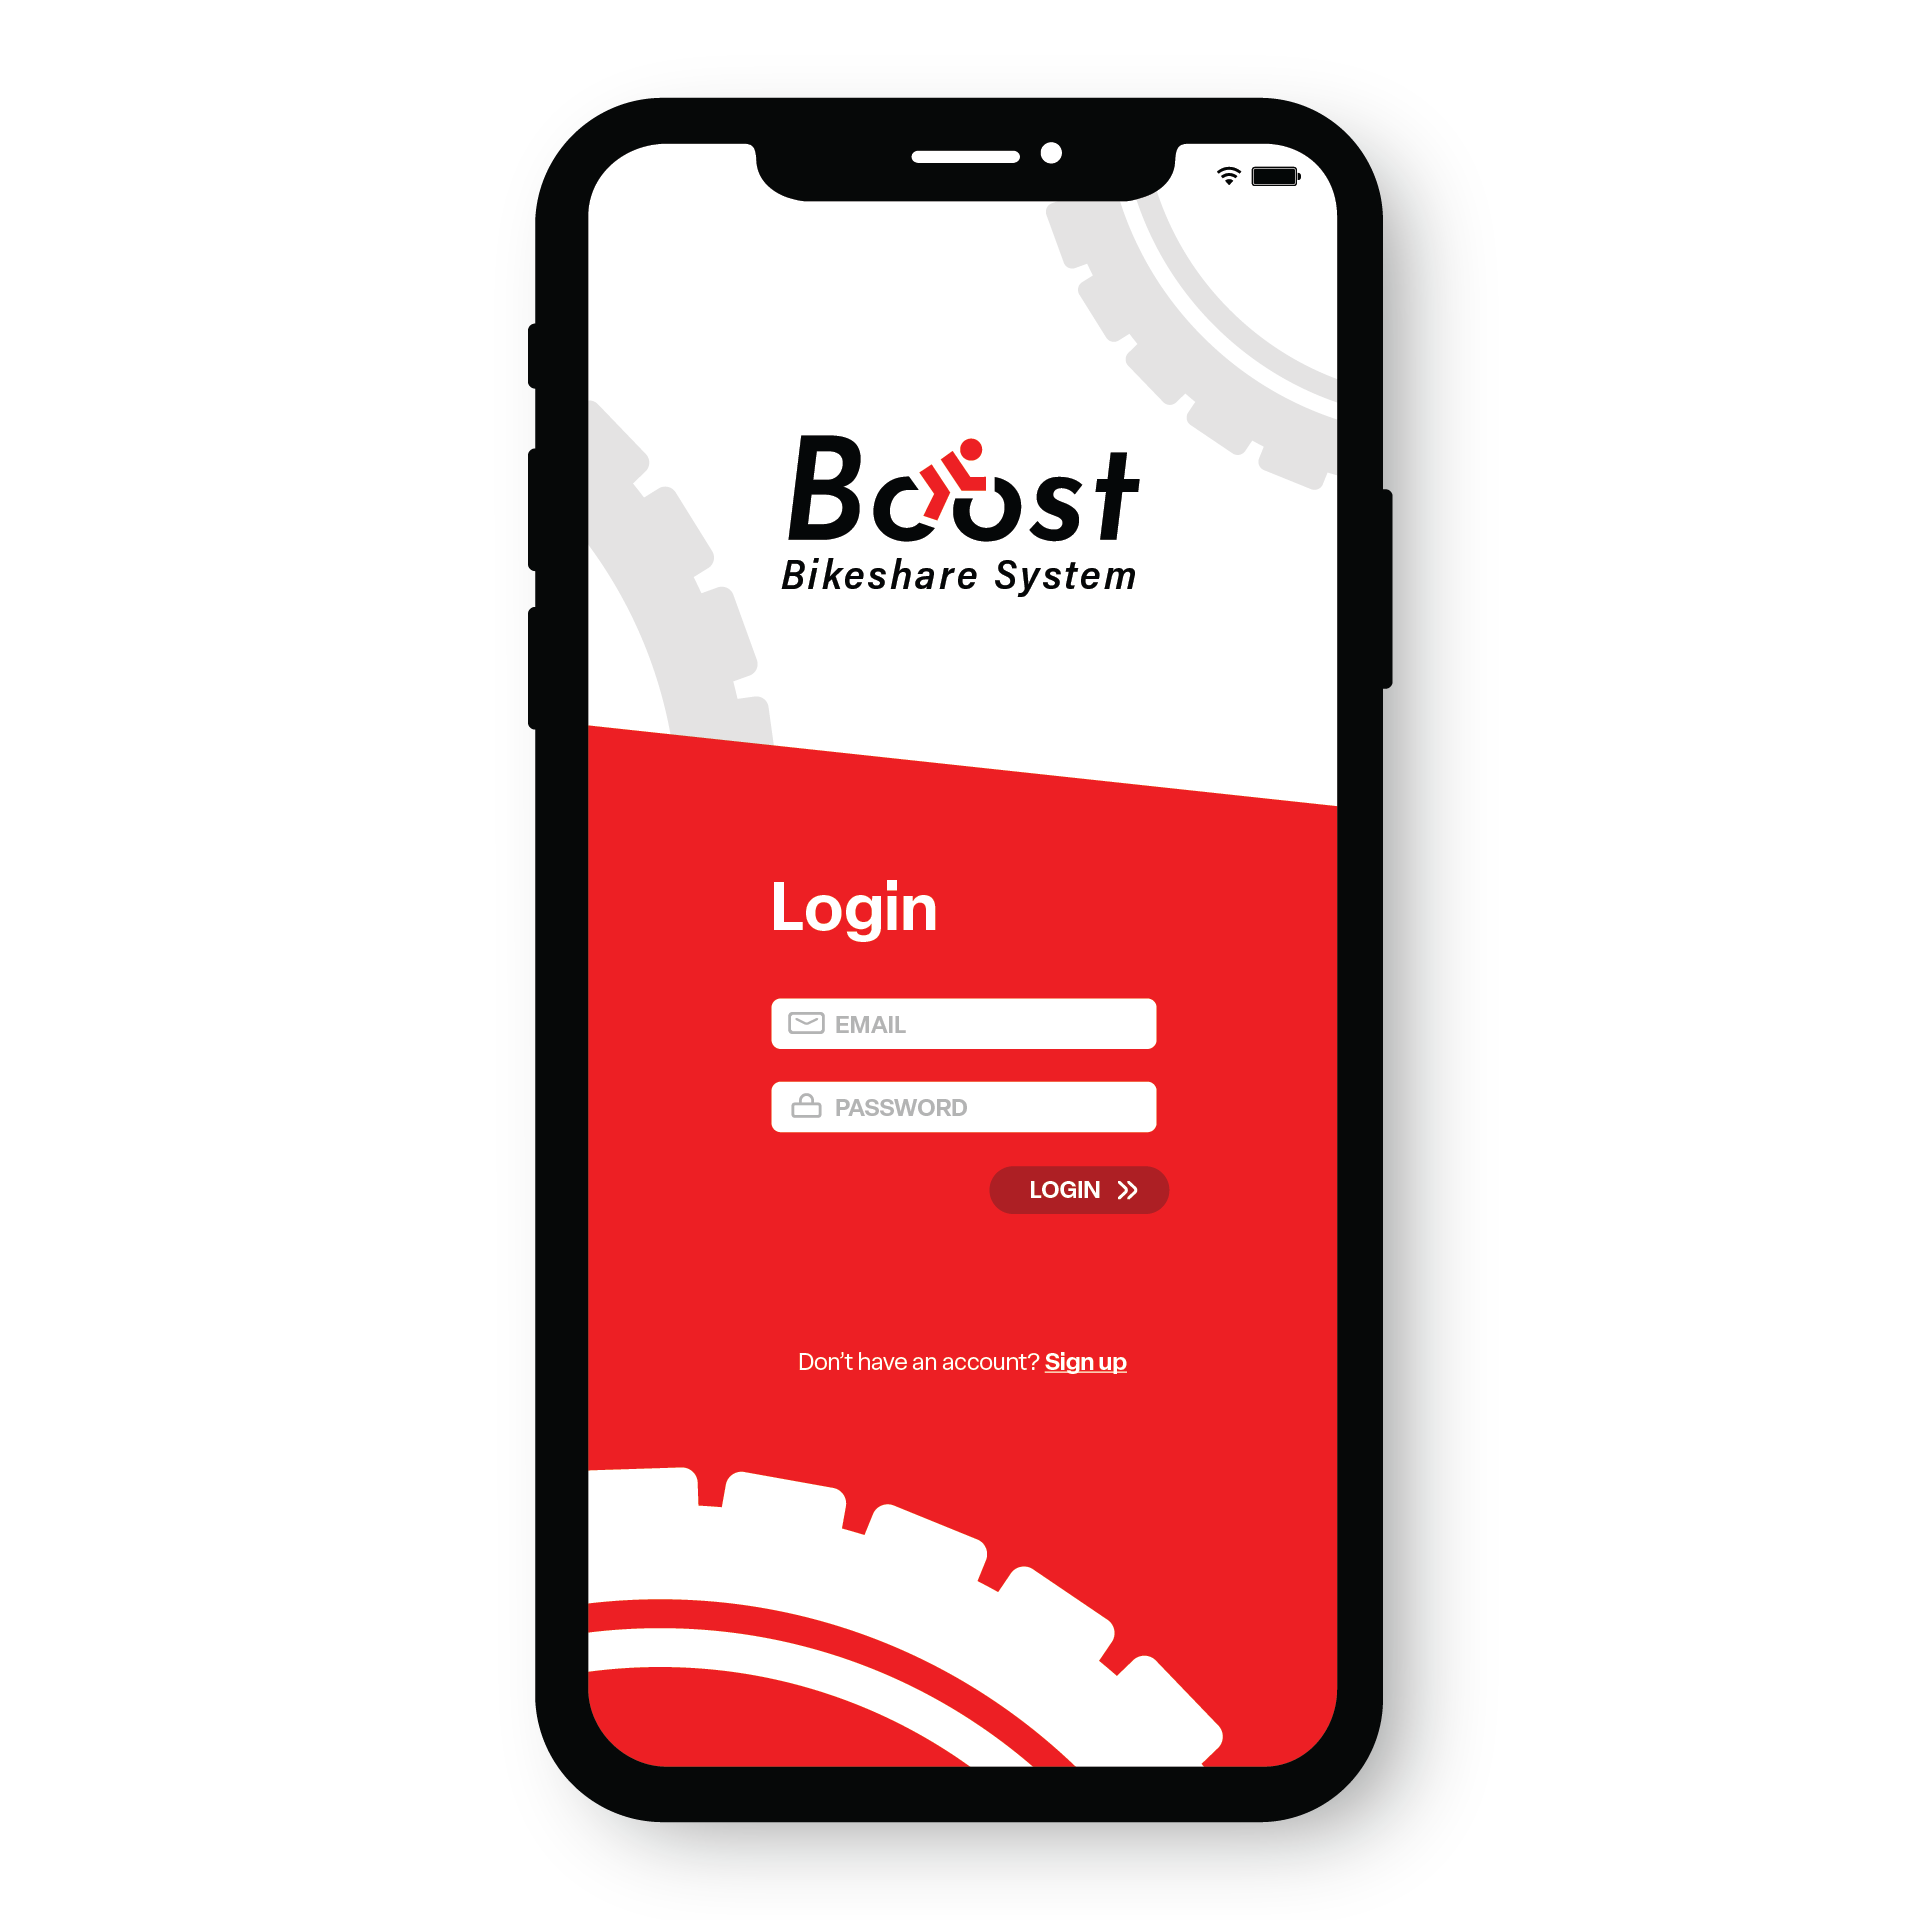 Boost mobile login screen on a phone